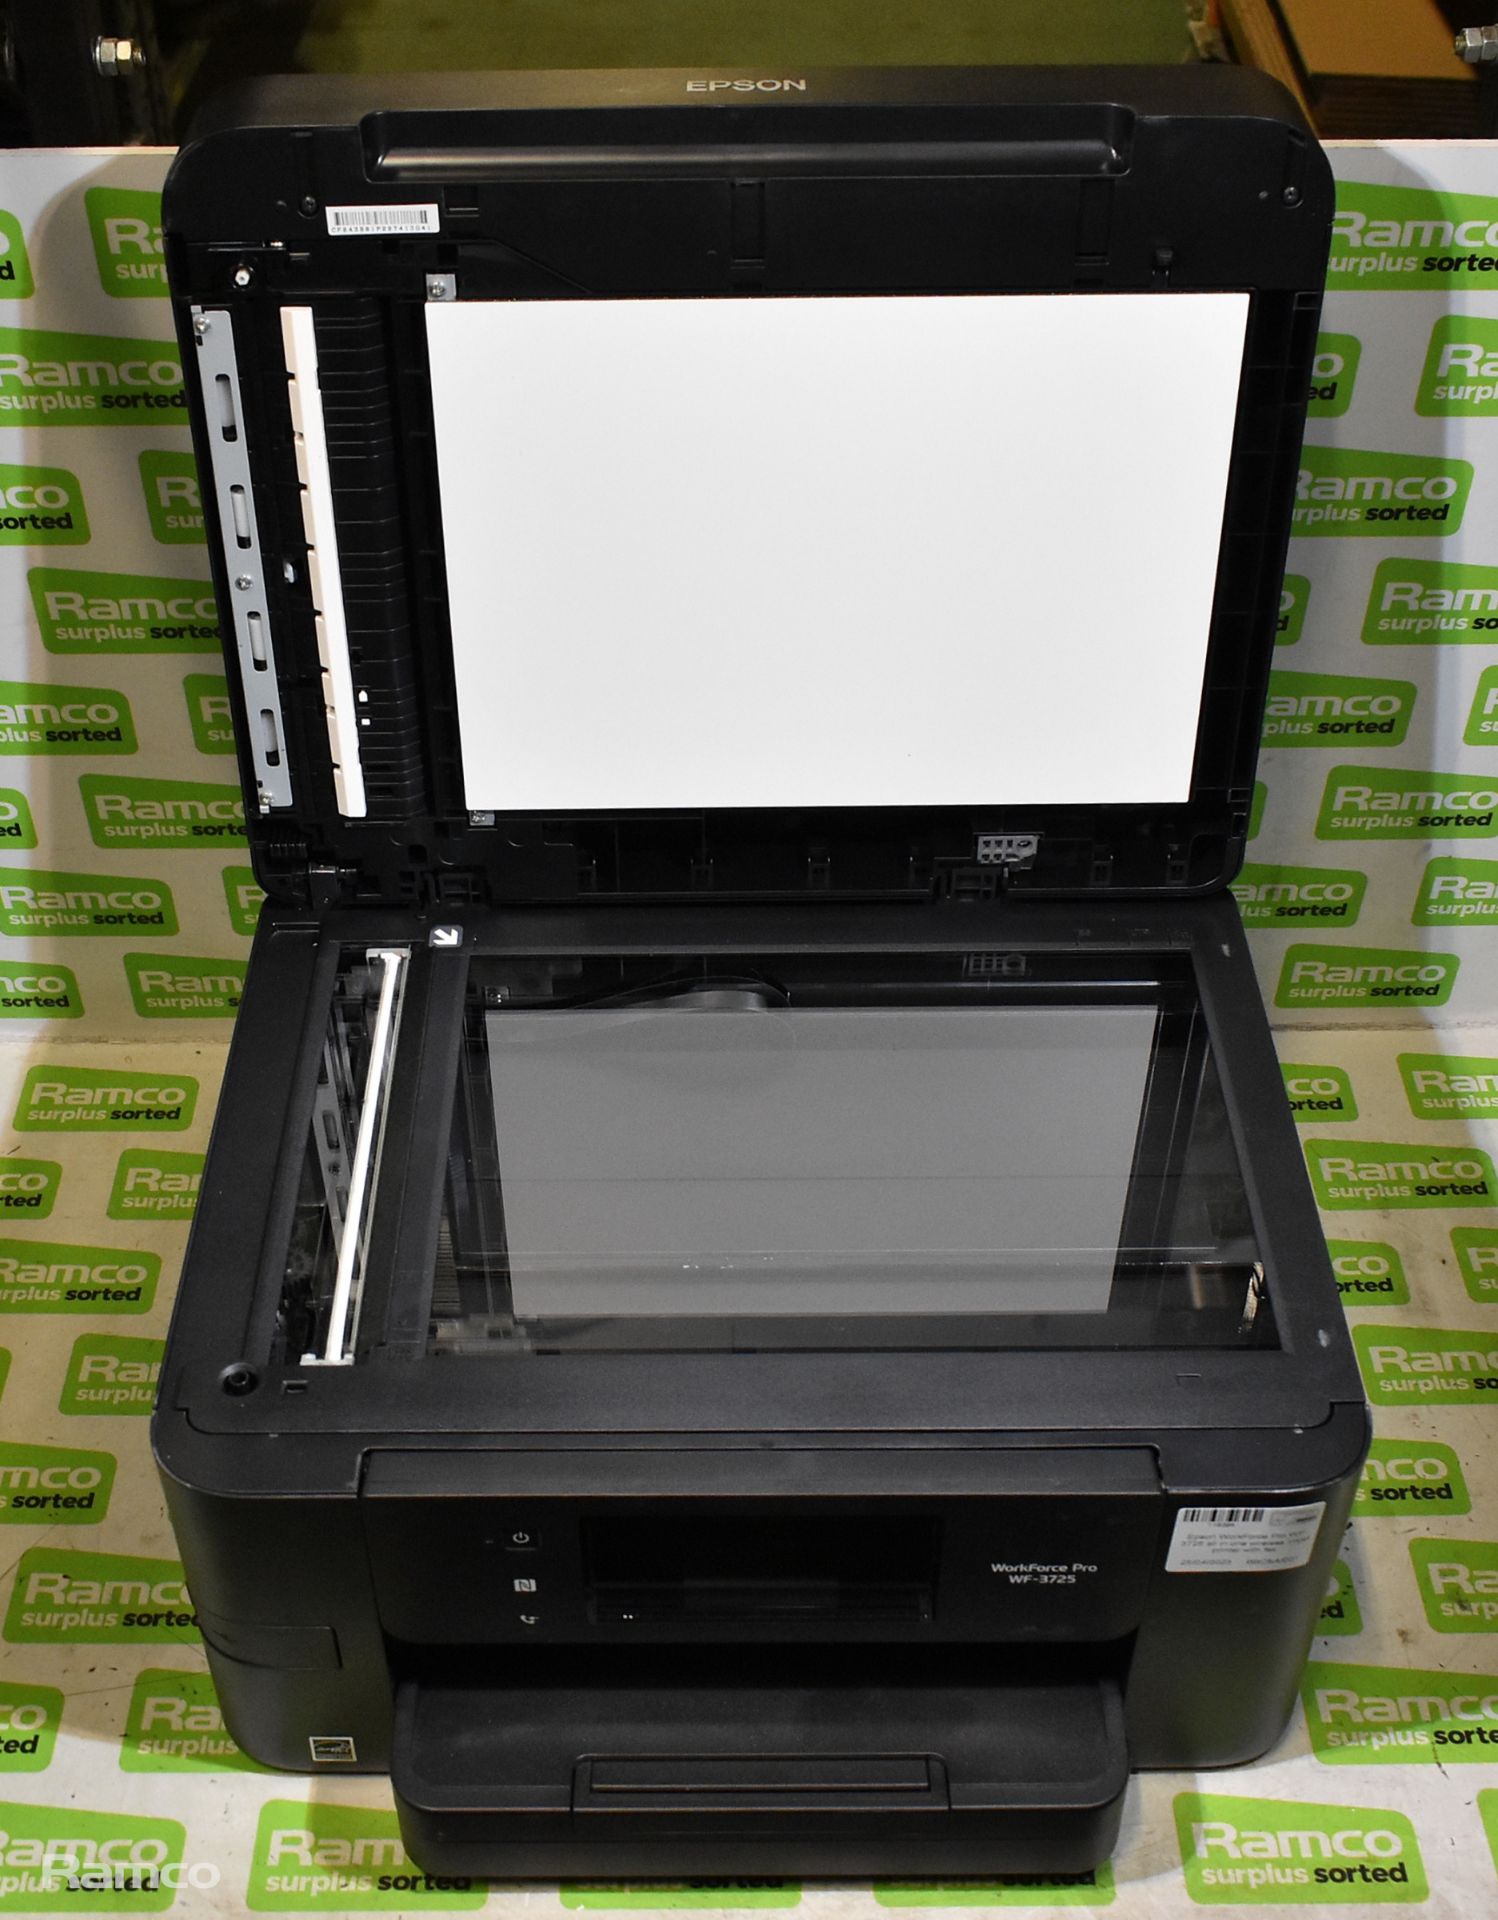 Epson WorkForce Pro WF-3725 all in one wireless inkjet printer with fax, HP LaserJet M1217nfw MFP - Bild 4 aus 19